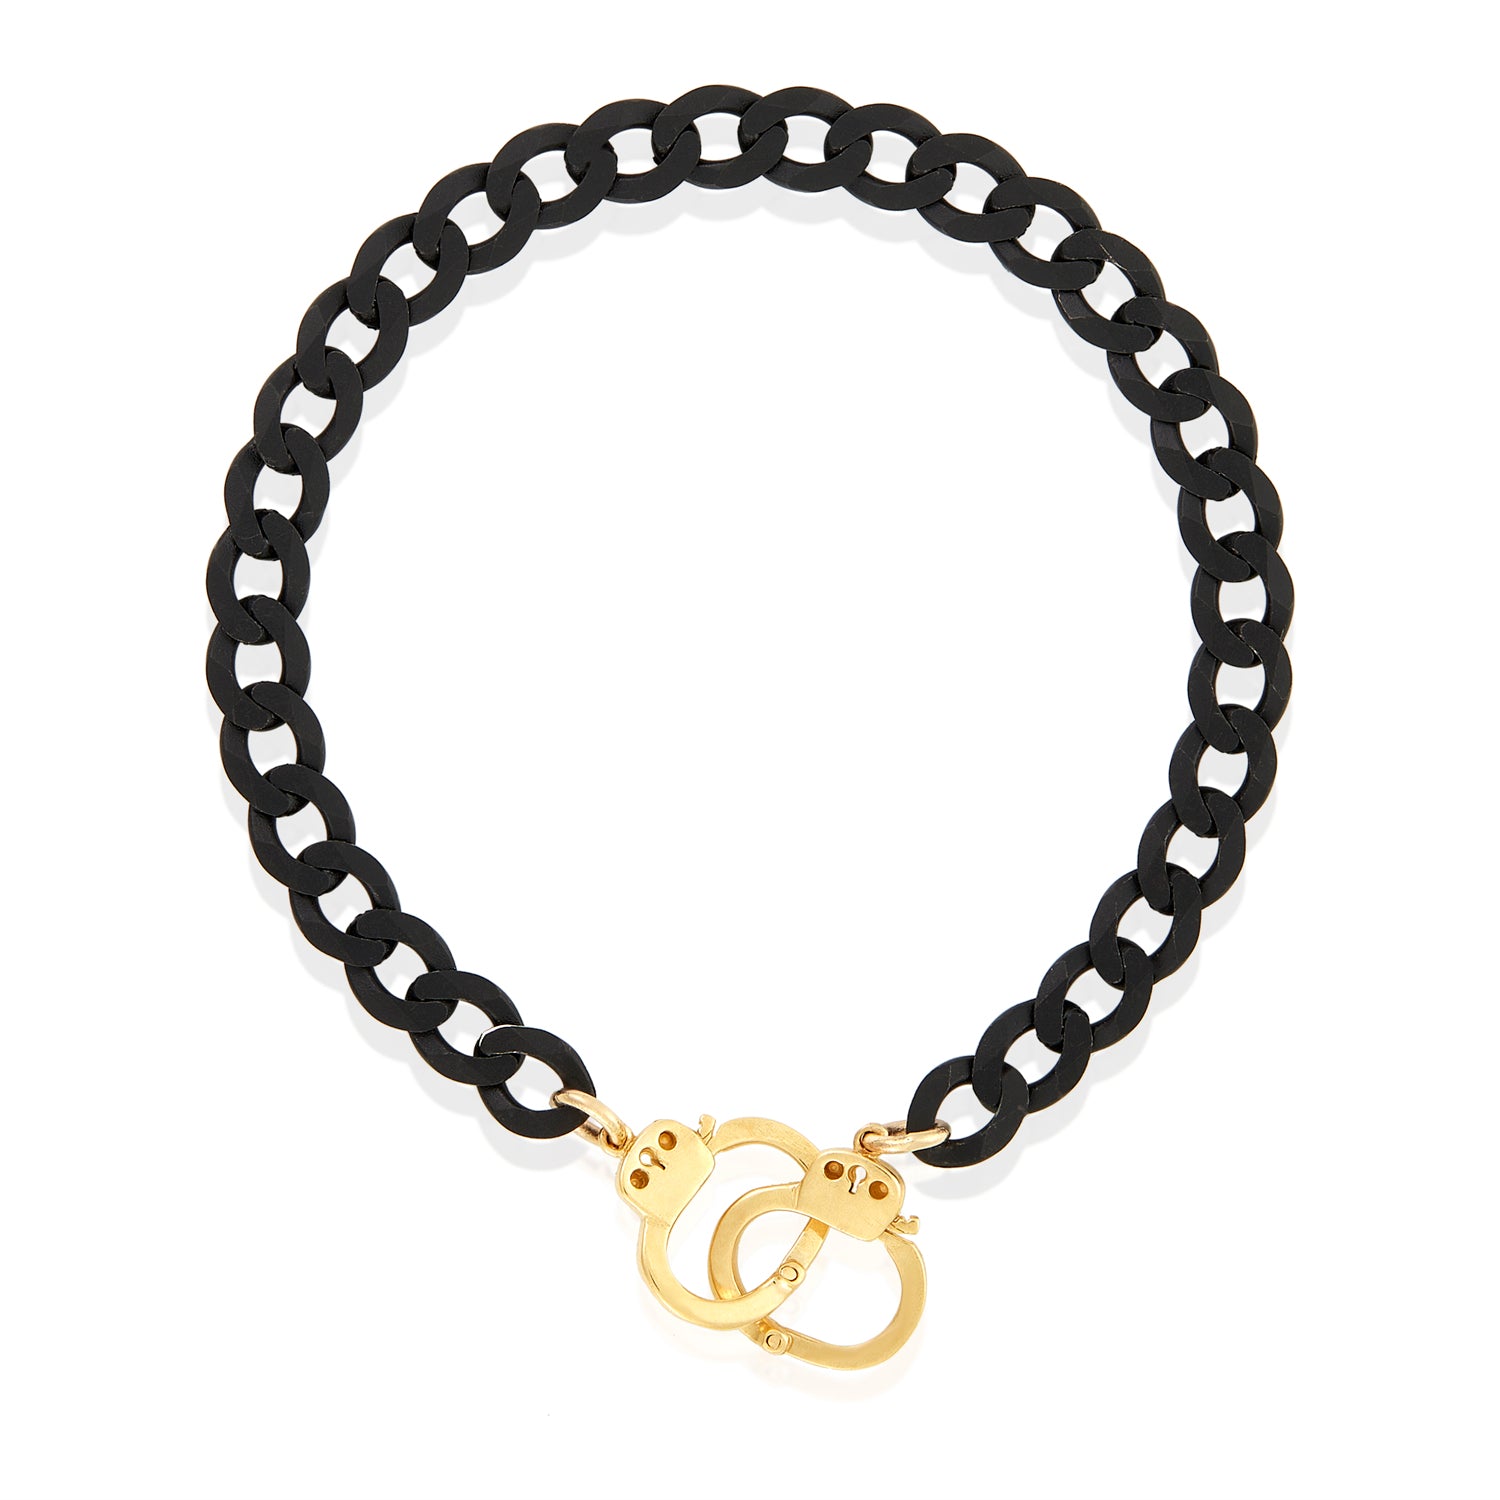 Handcuff Curb Chain Bracelet